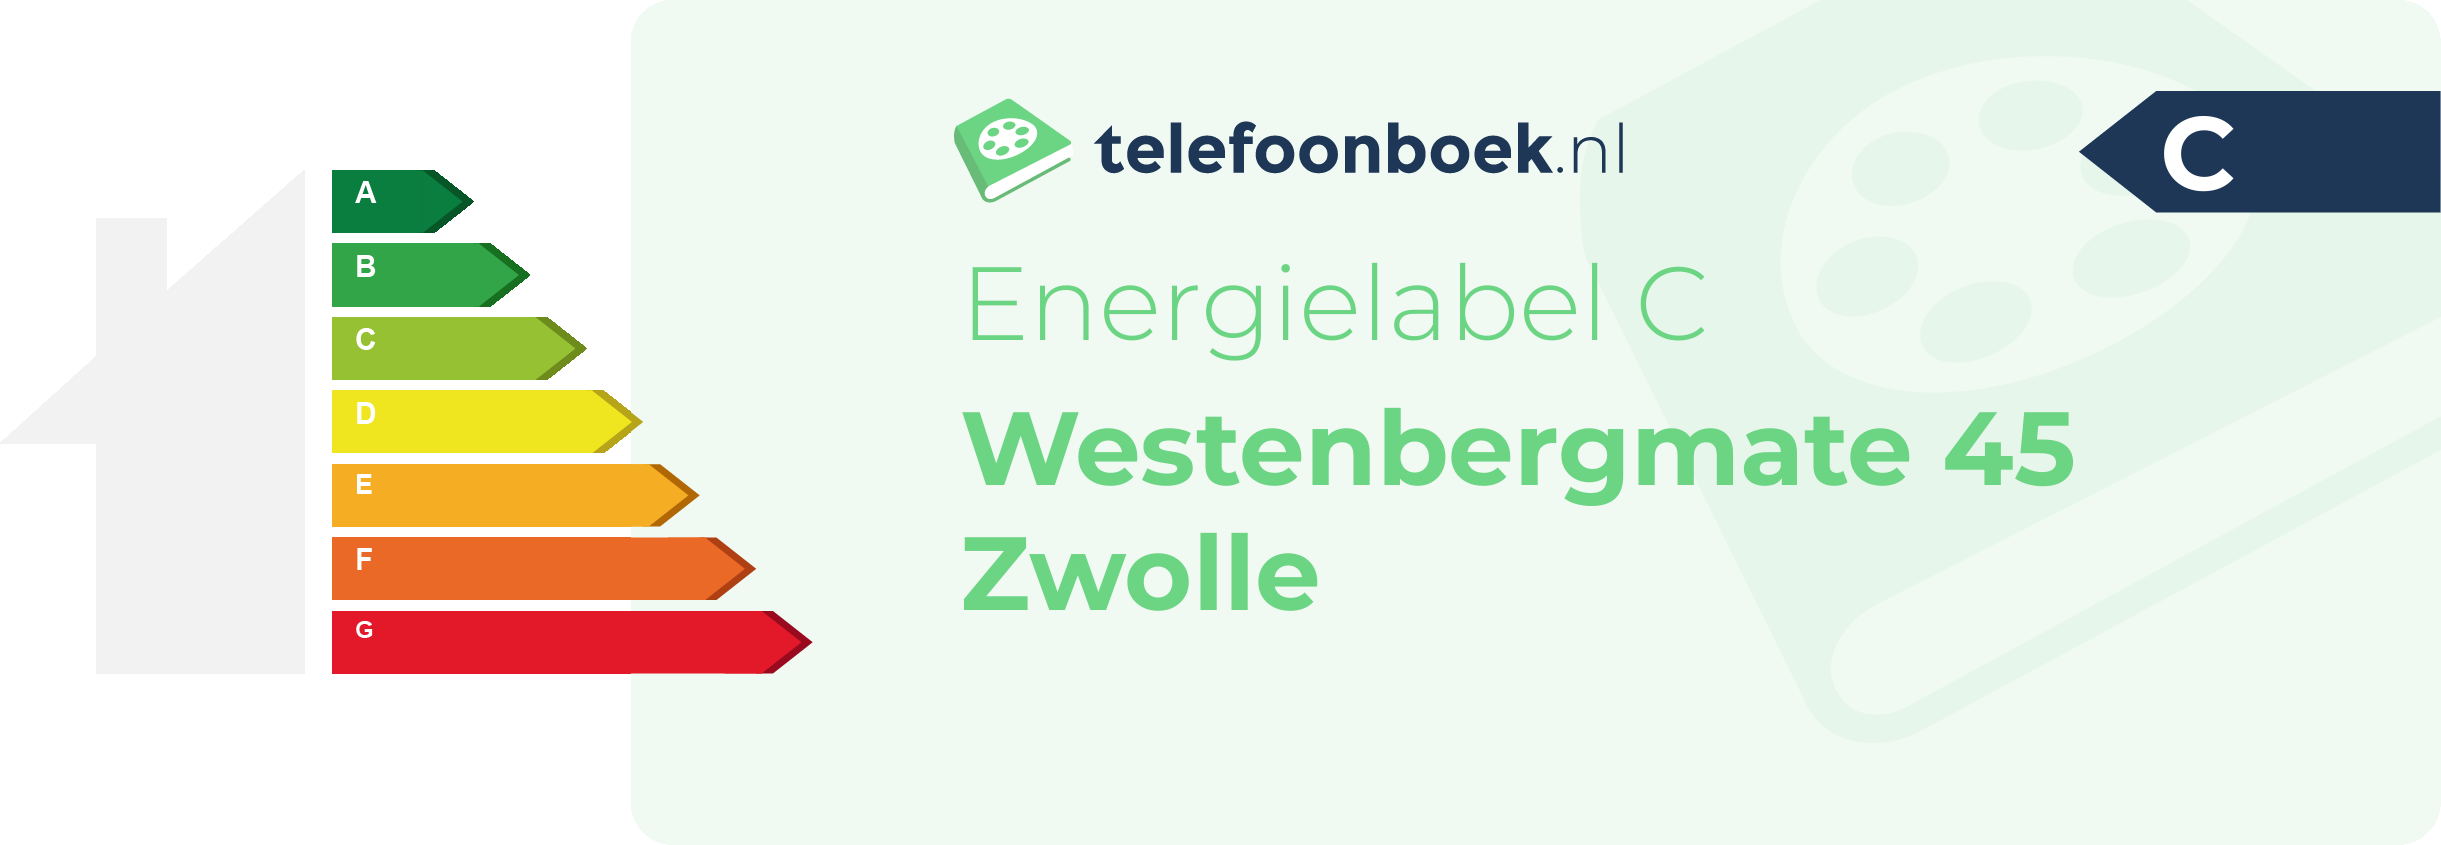 Energielabel Westenbergmate 45 Zwolle